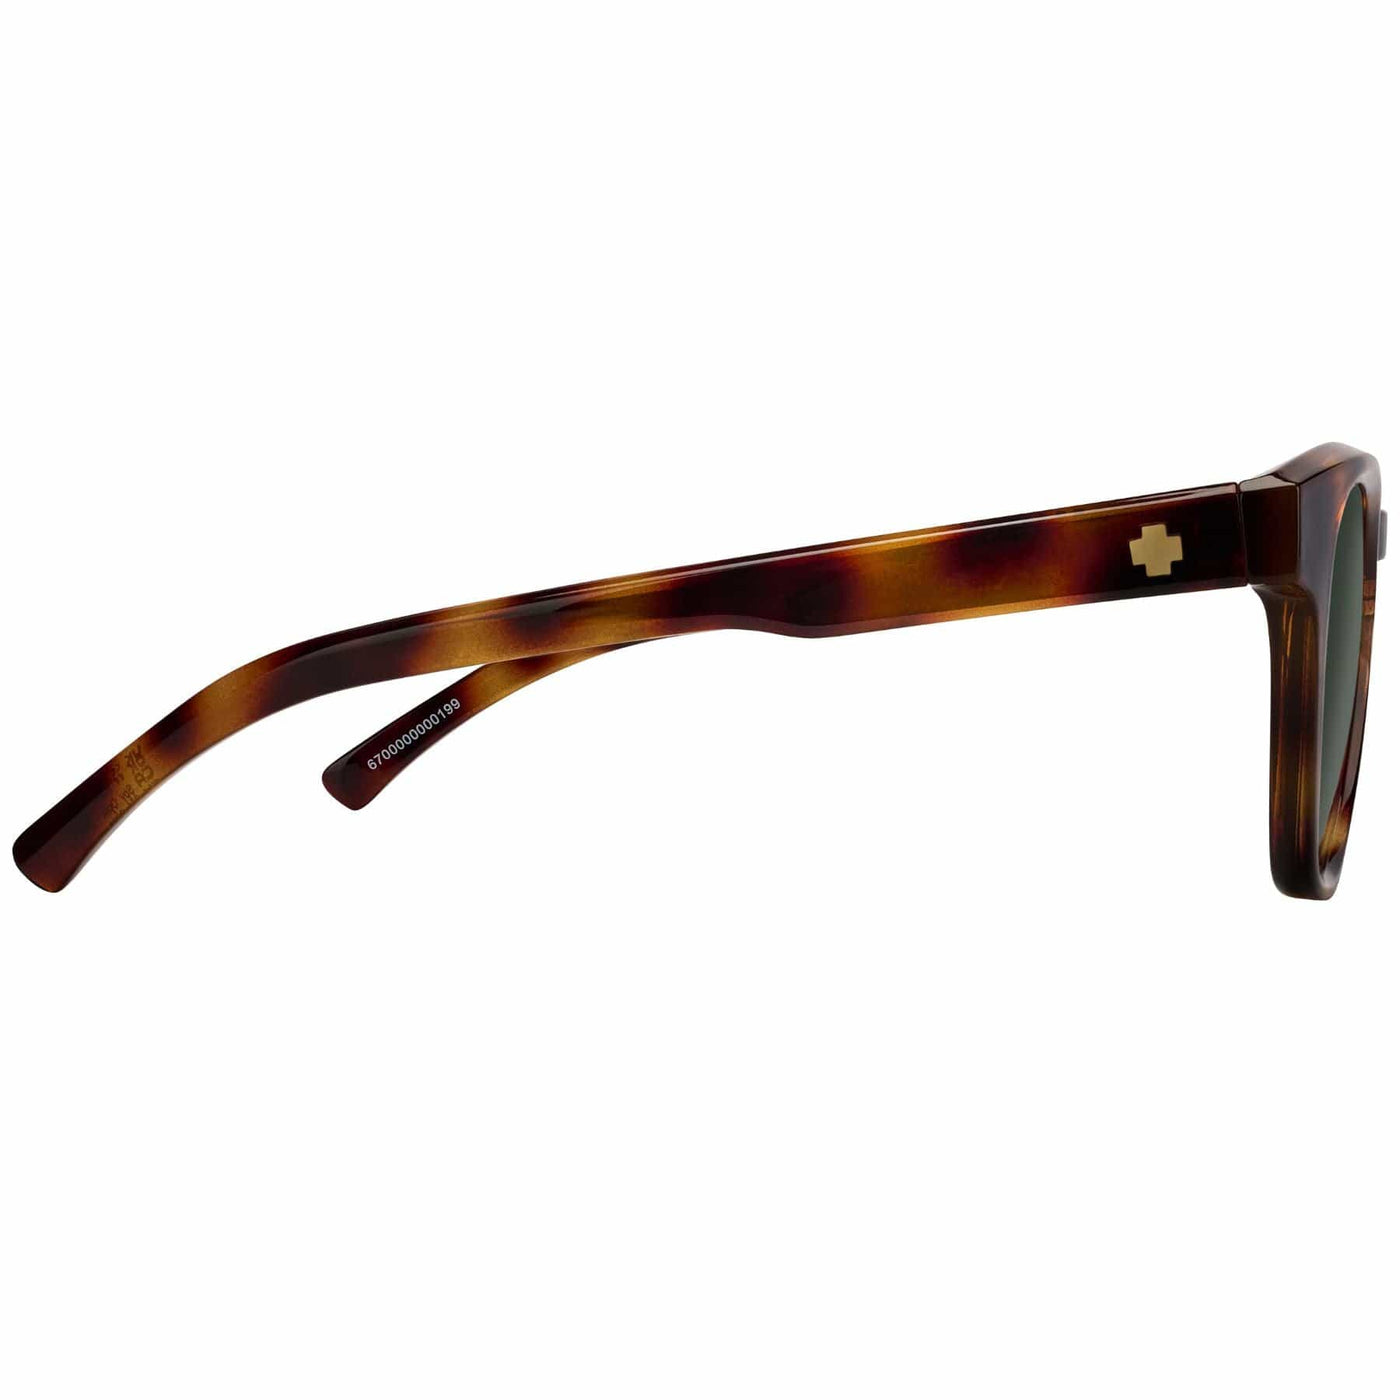 SPY CEDROS Polarized Sunglasses, Happy Lens - Gray/Green 8Lines Shop - Fast Shipping